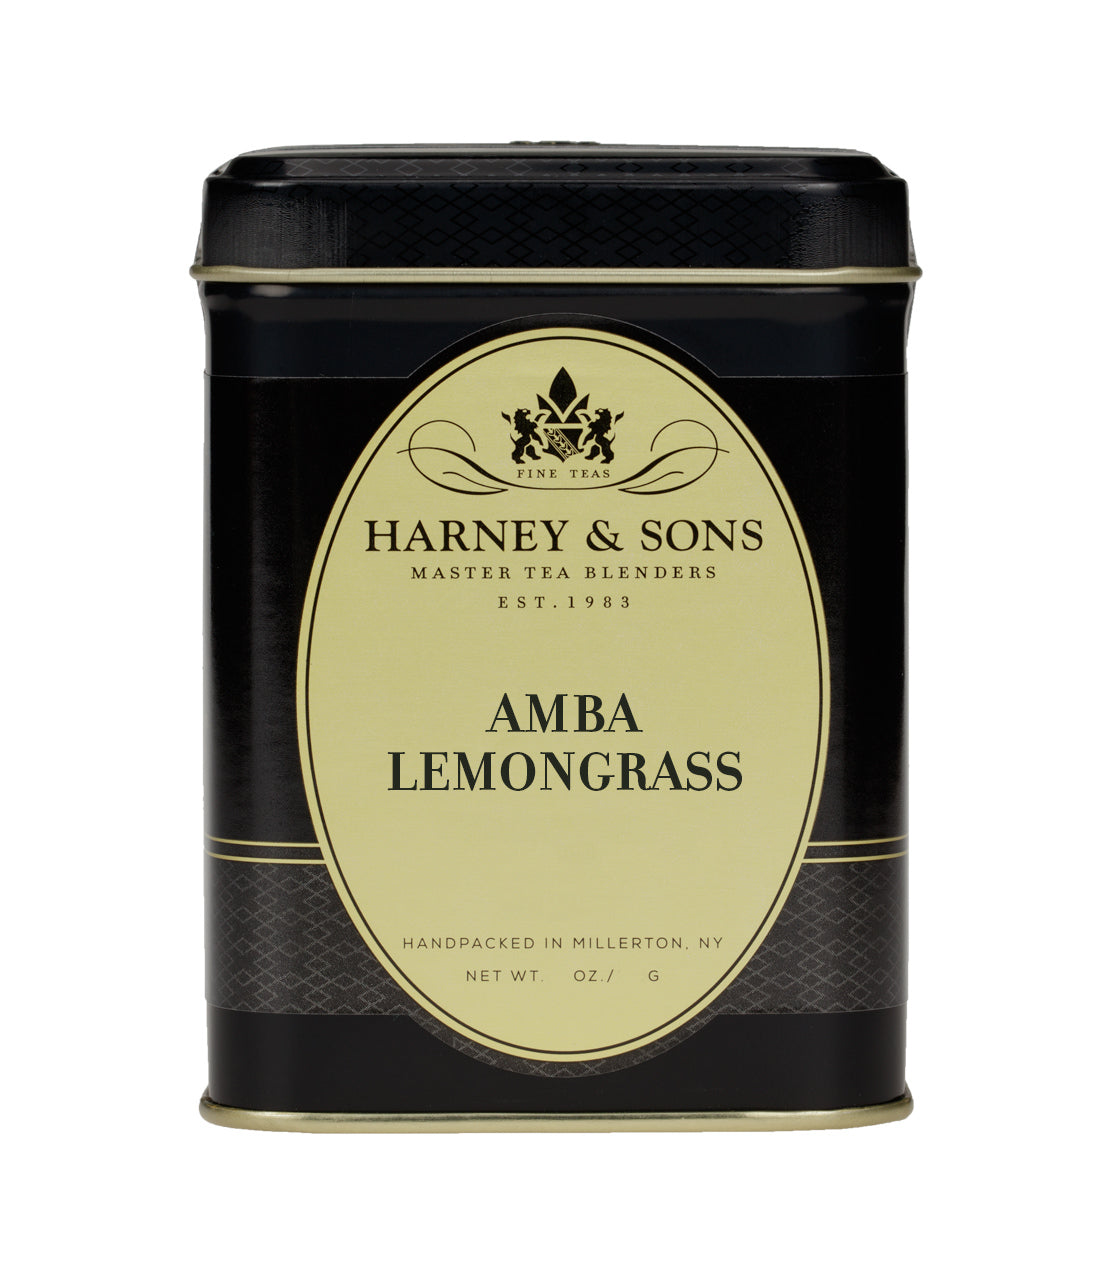 Amba Lemongrass - Loose 2 oz. Tin - Harney & Sons Fine Teas